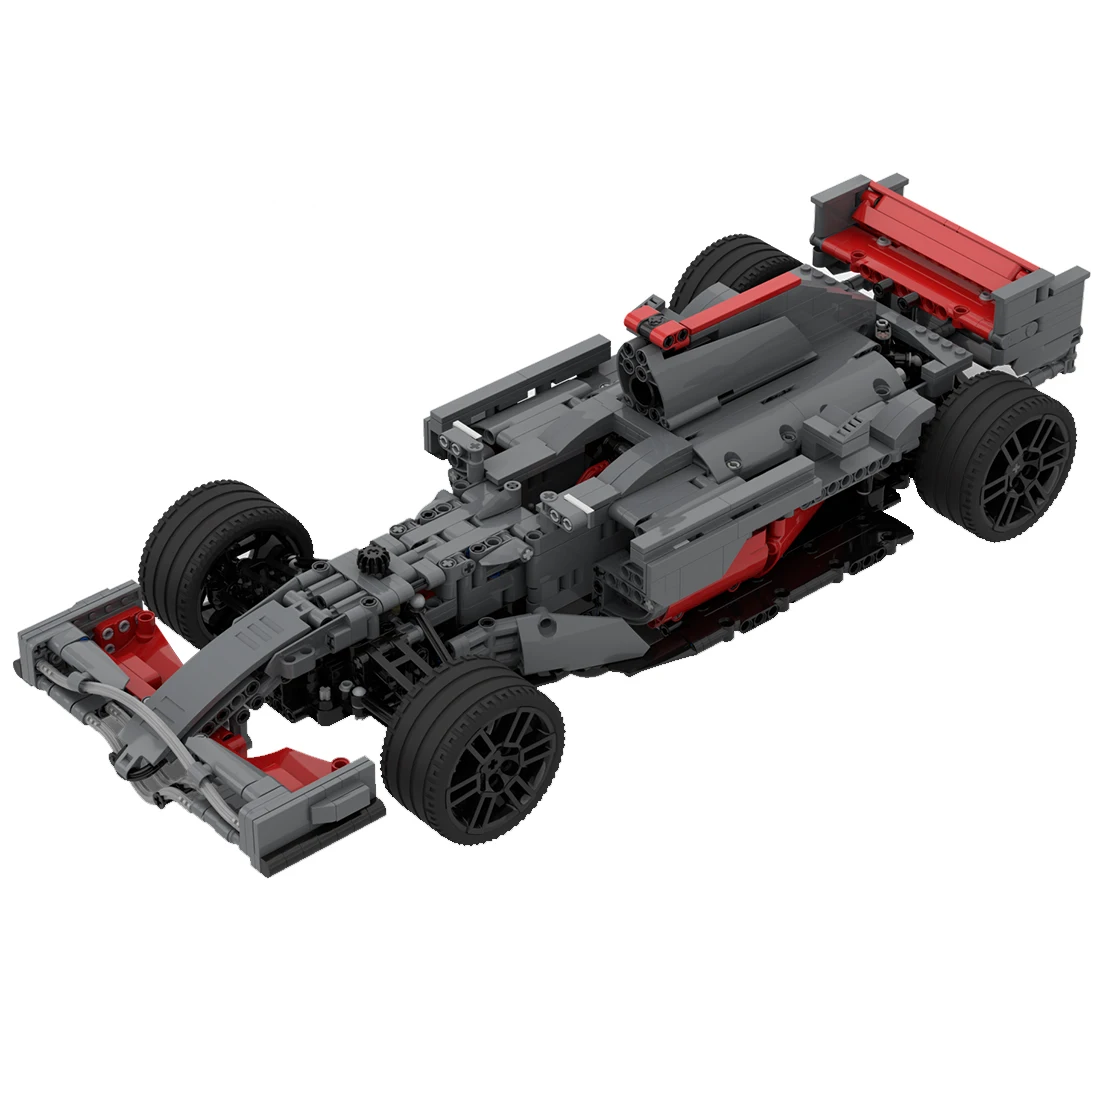 

Authorized MOC-97130 1522pcs/Set MP4-23 (8386 Base) 1:10 Scale Formula Circuits Champion Racing Car Model Building Blocks Set